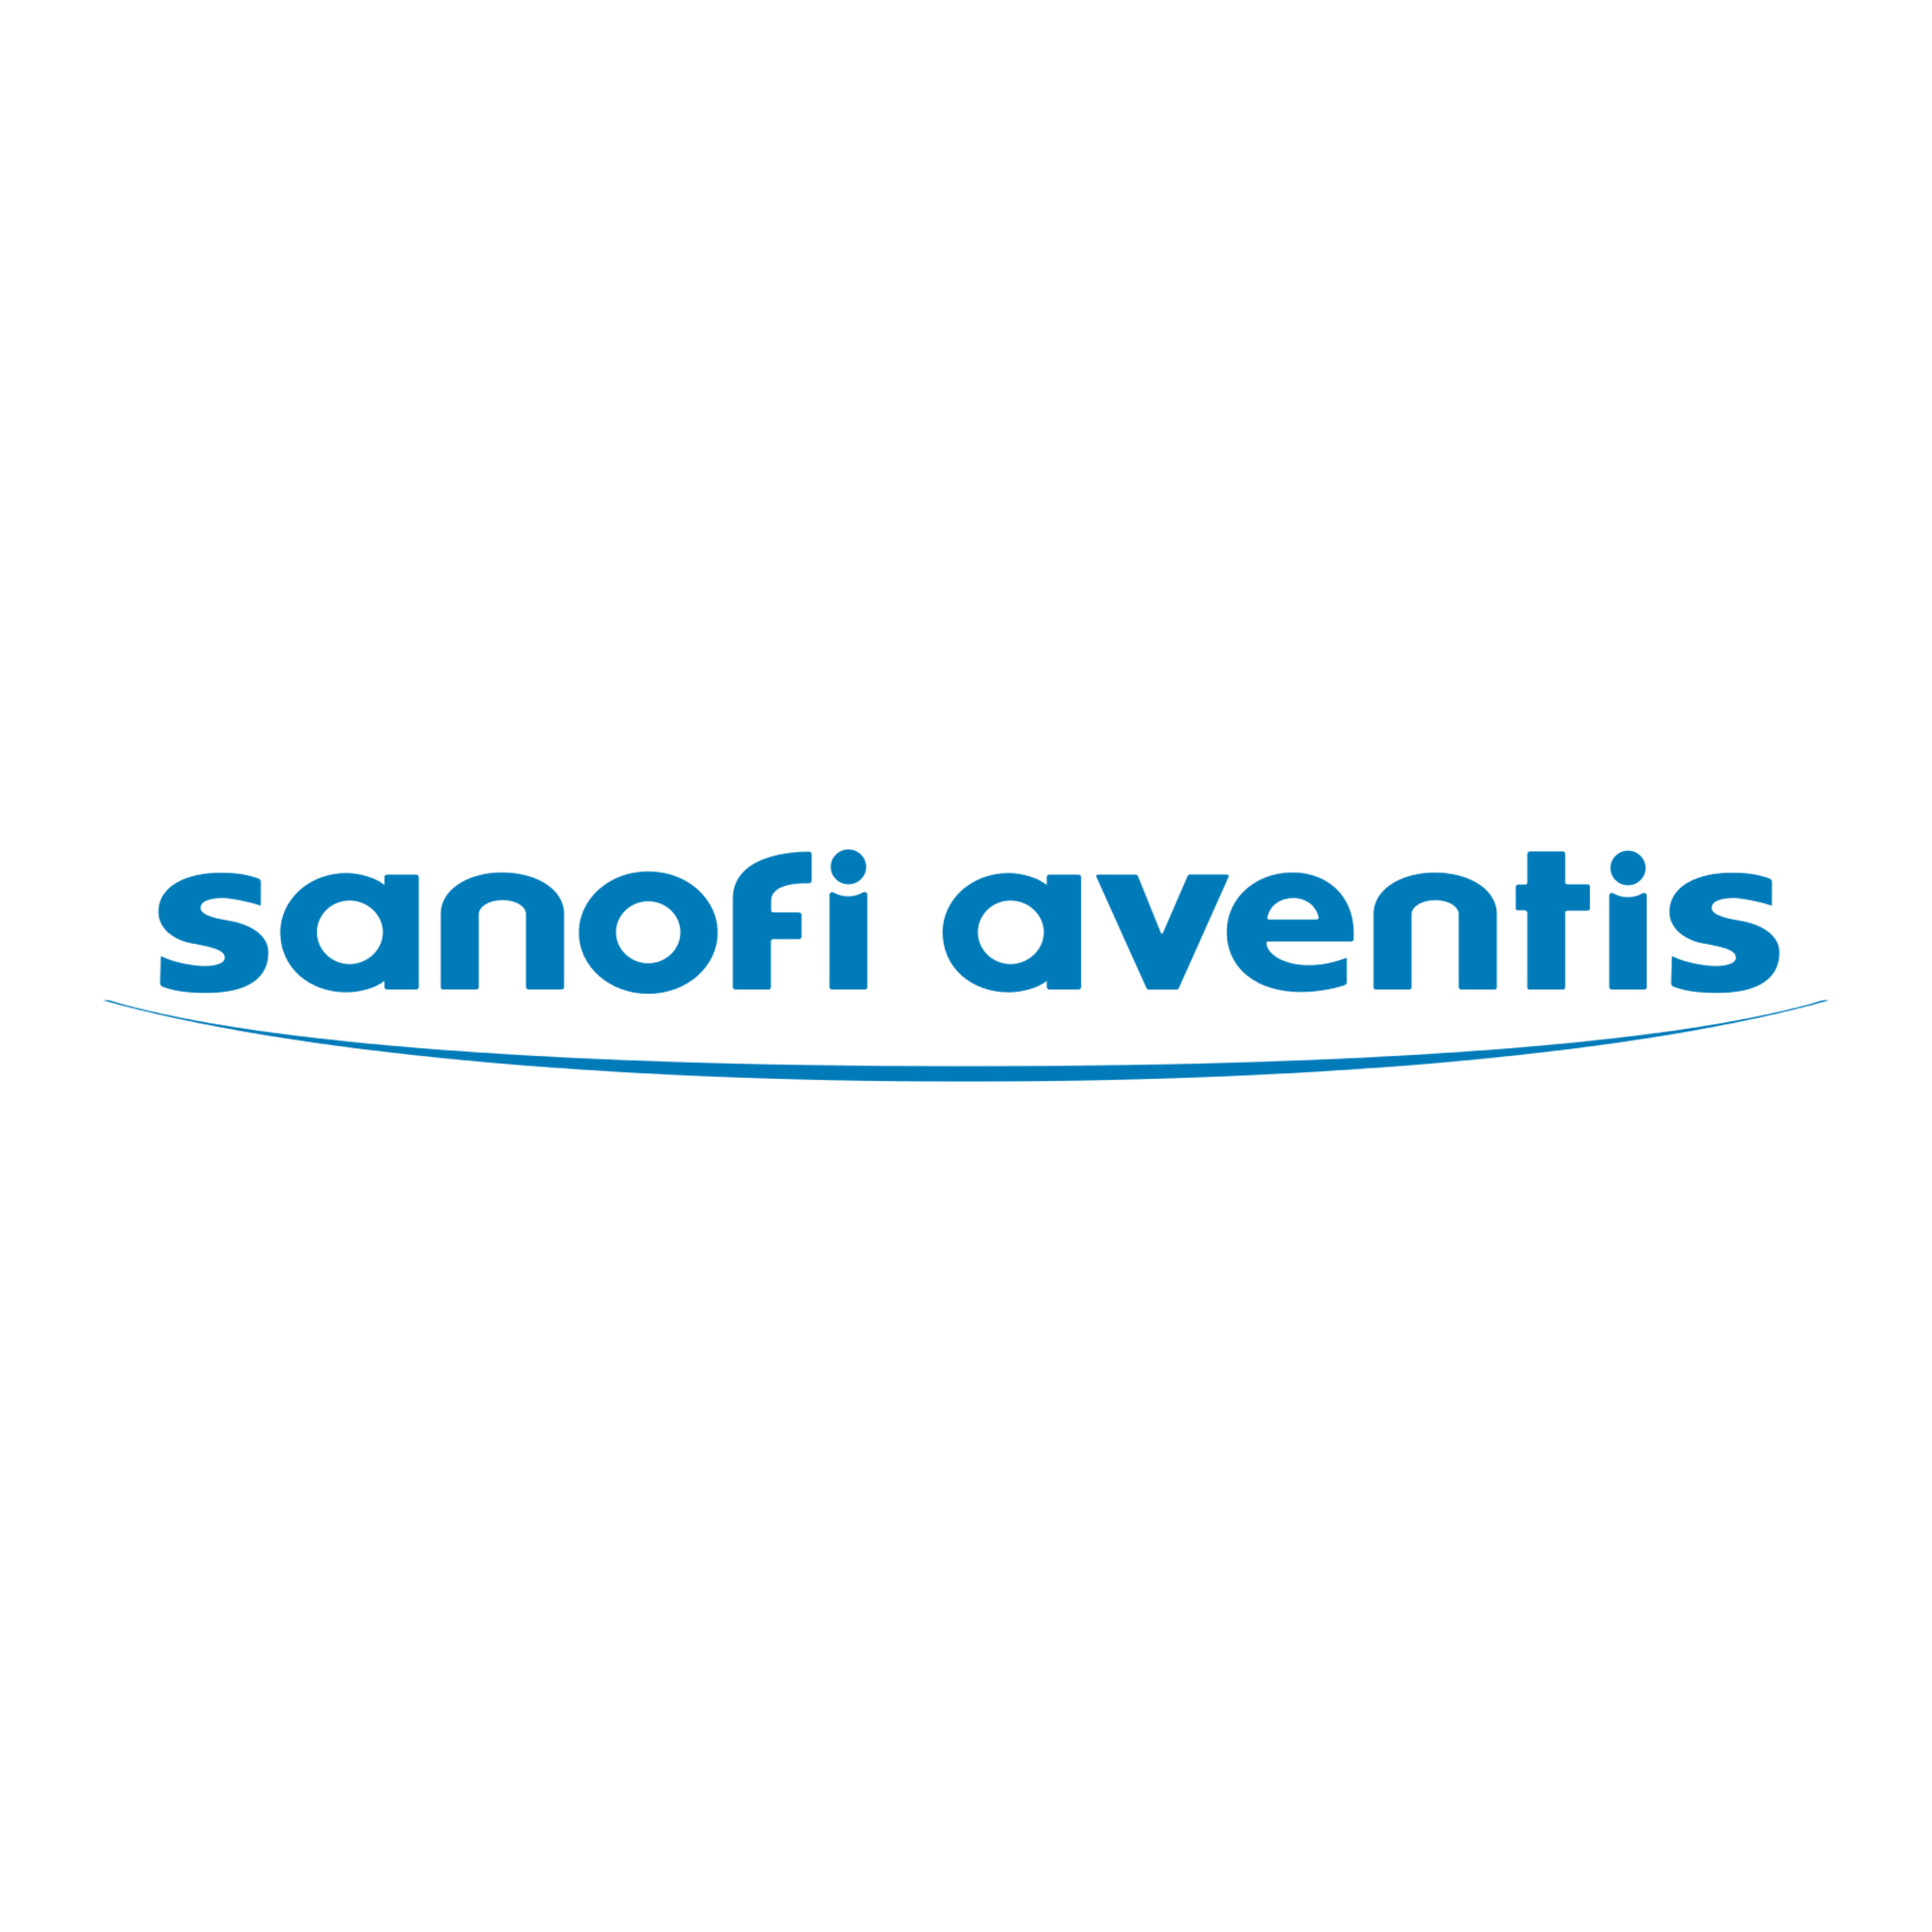 EOAD-Clients-Sanofi Aventis.jpg